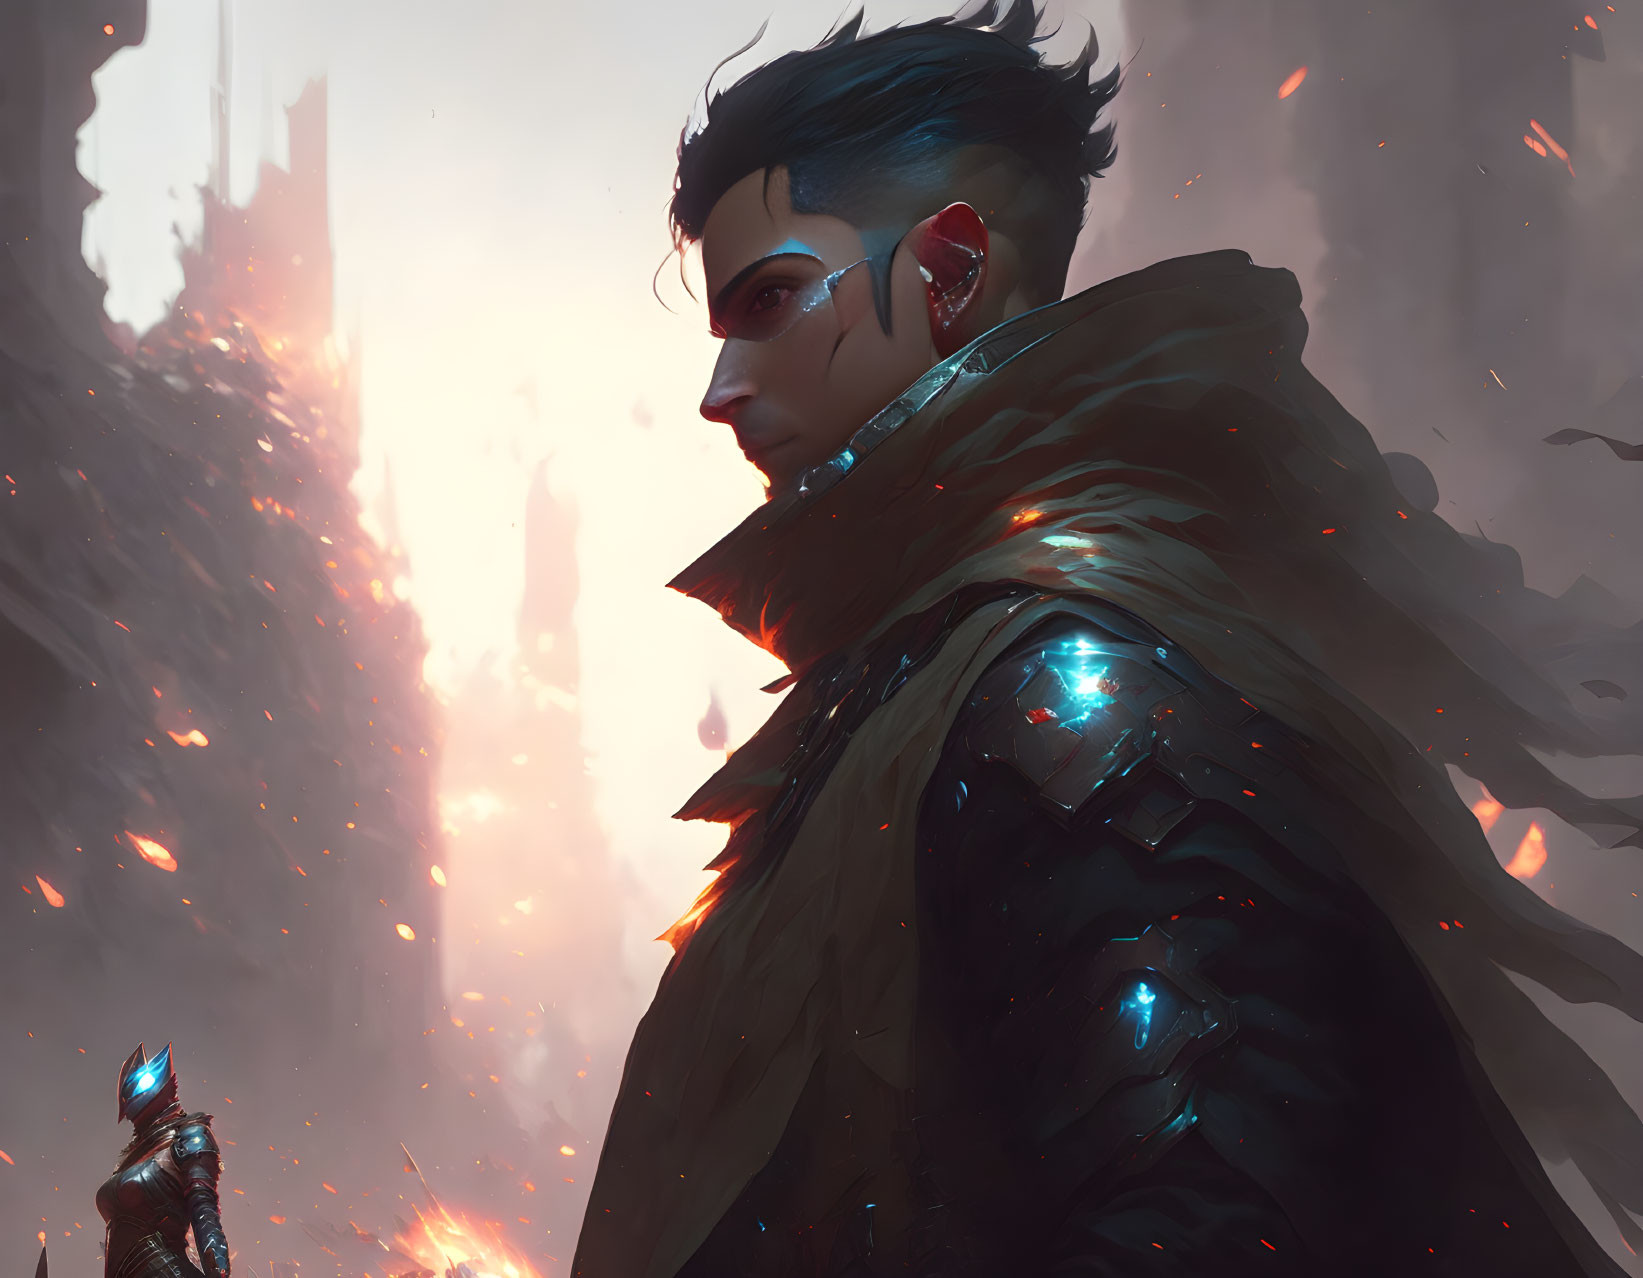 Digital artwork: Dark-haired man in futuristic armor on smoky battlefield